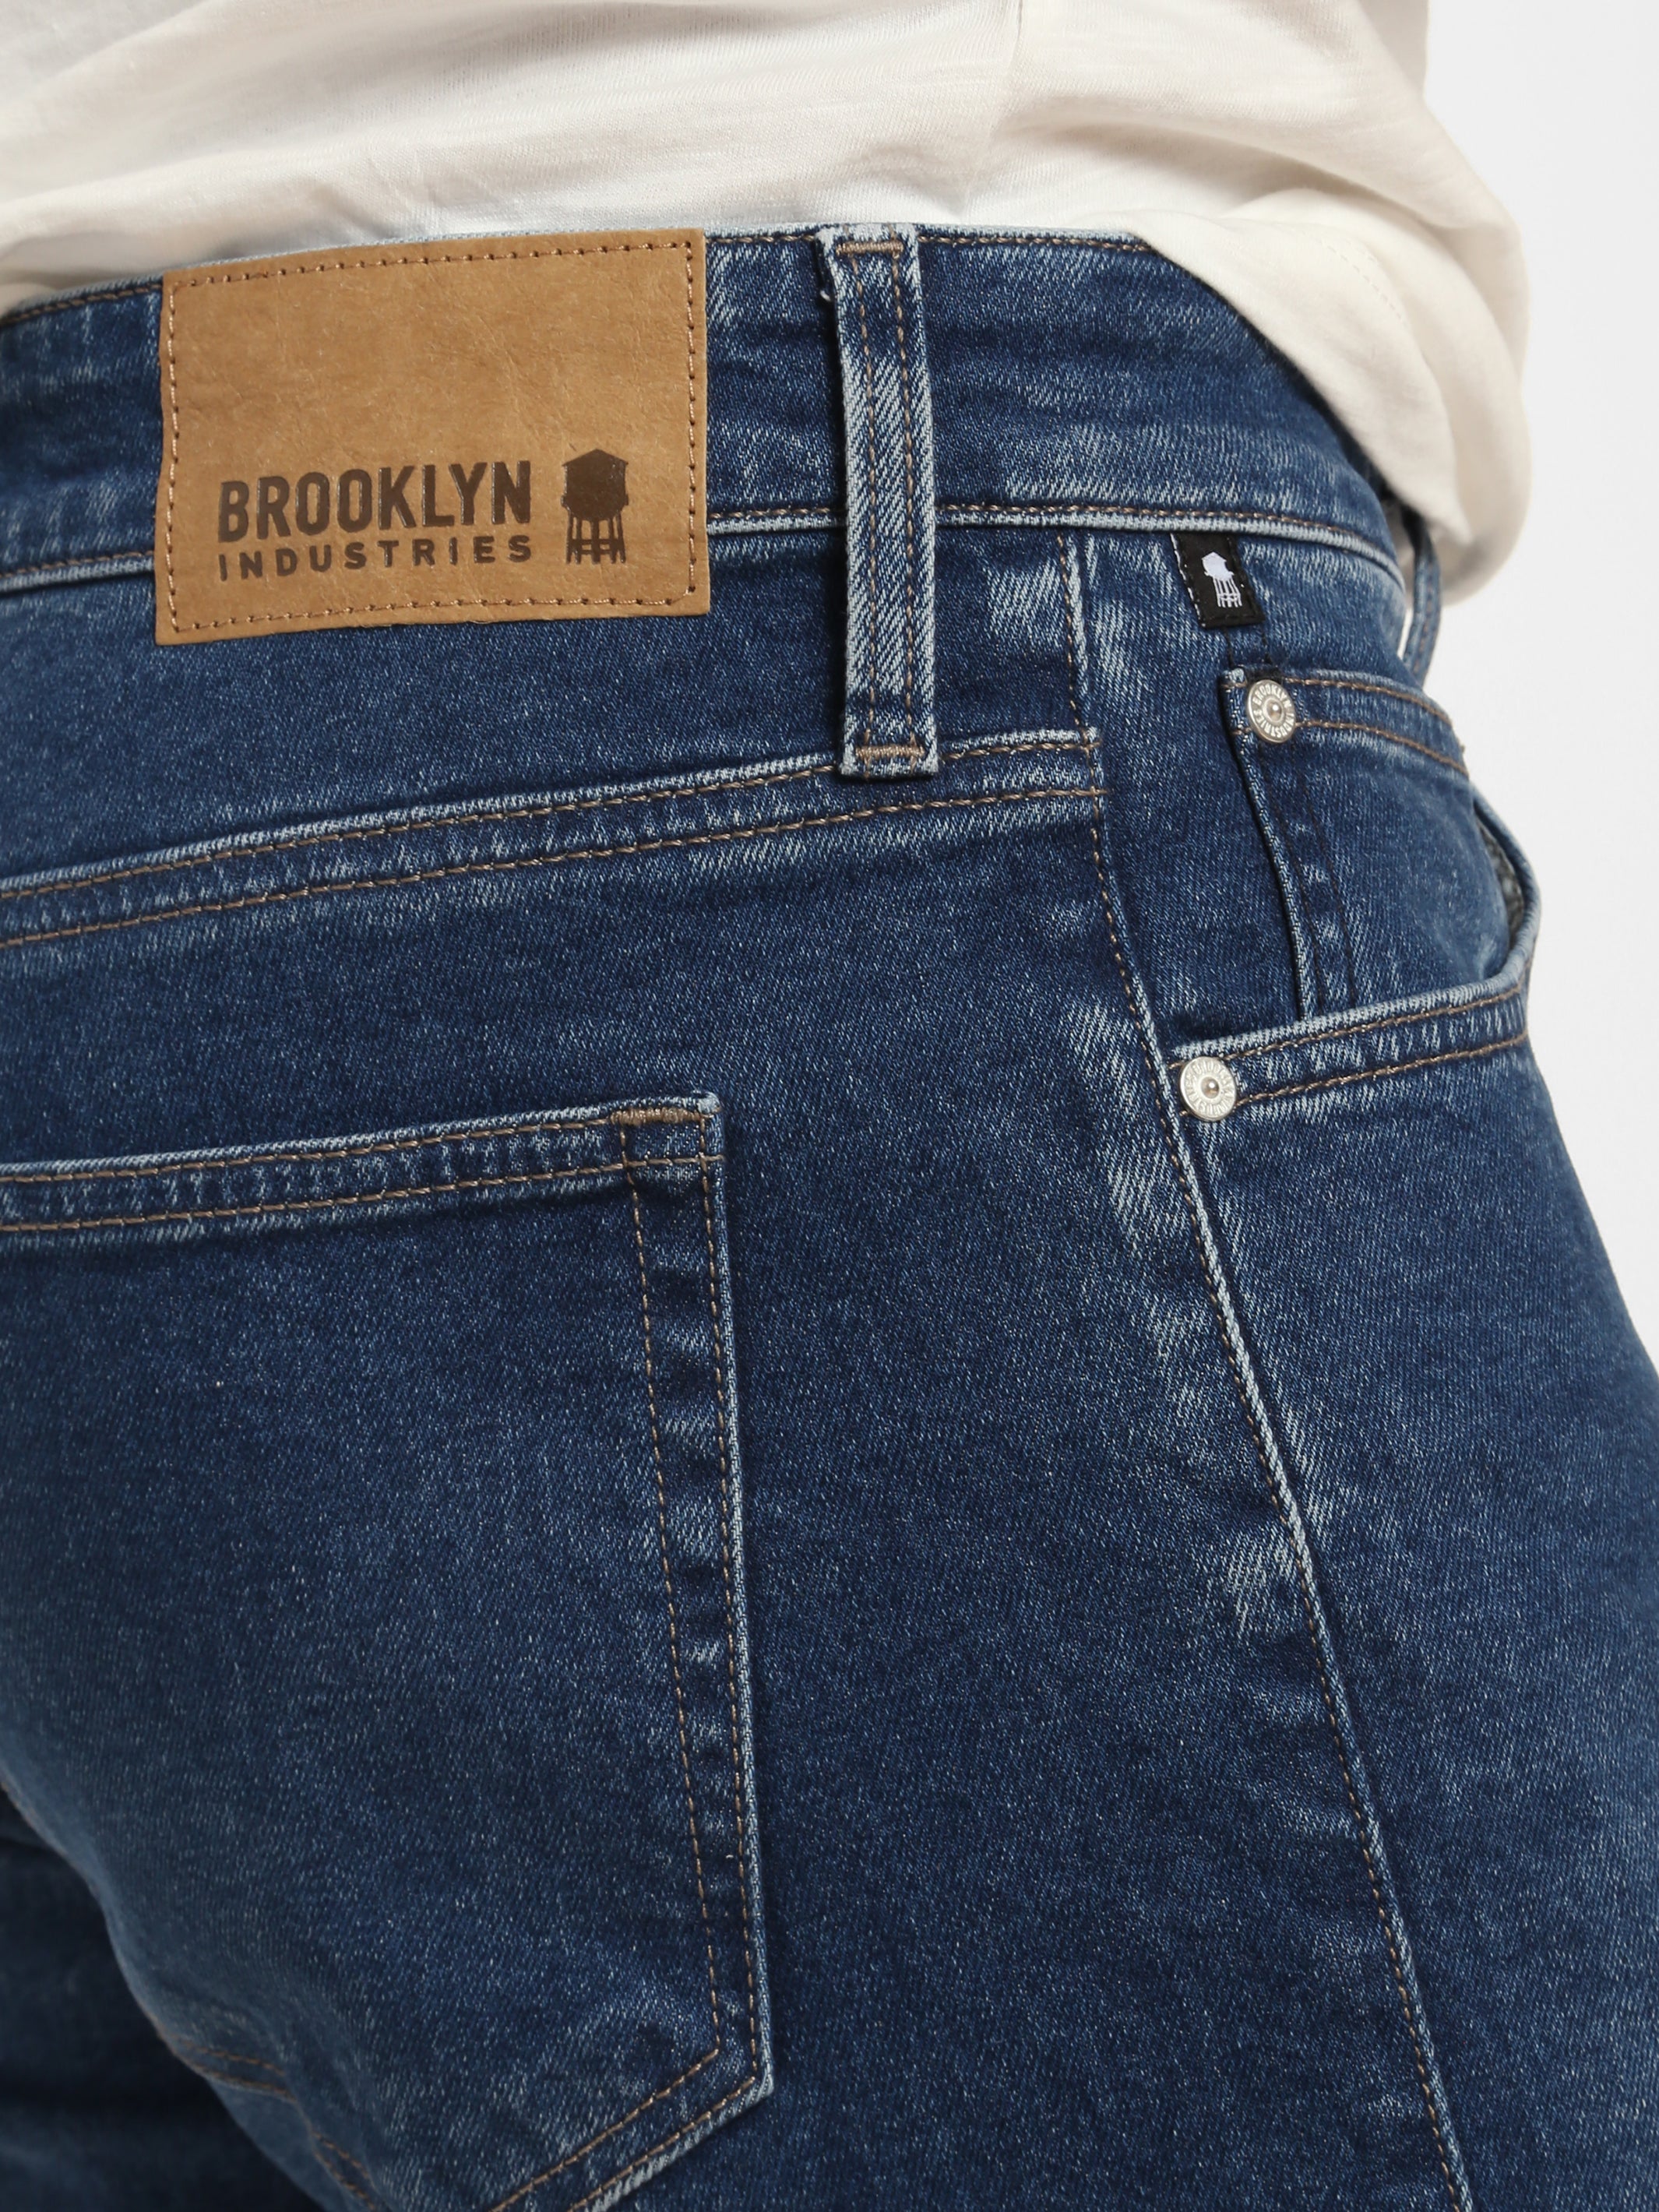 Clark Skinny Jeans in Dark Denim - BROOKLYN INDUSTRIES